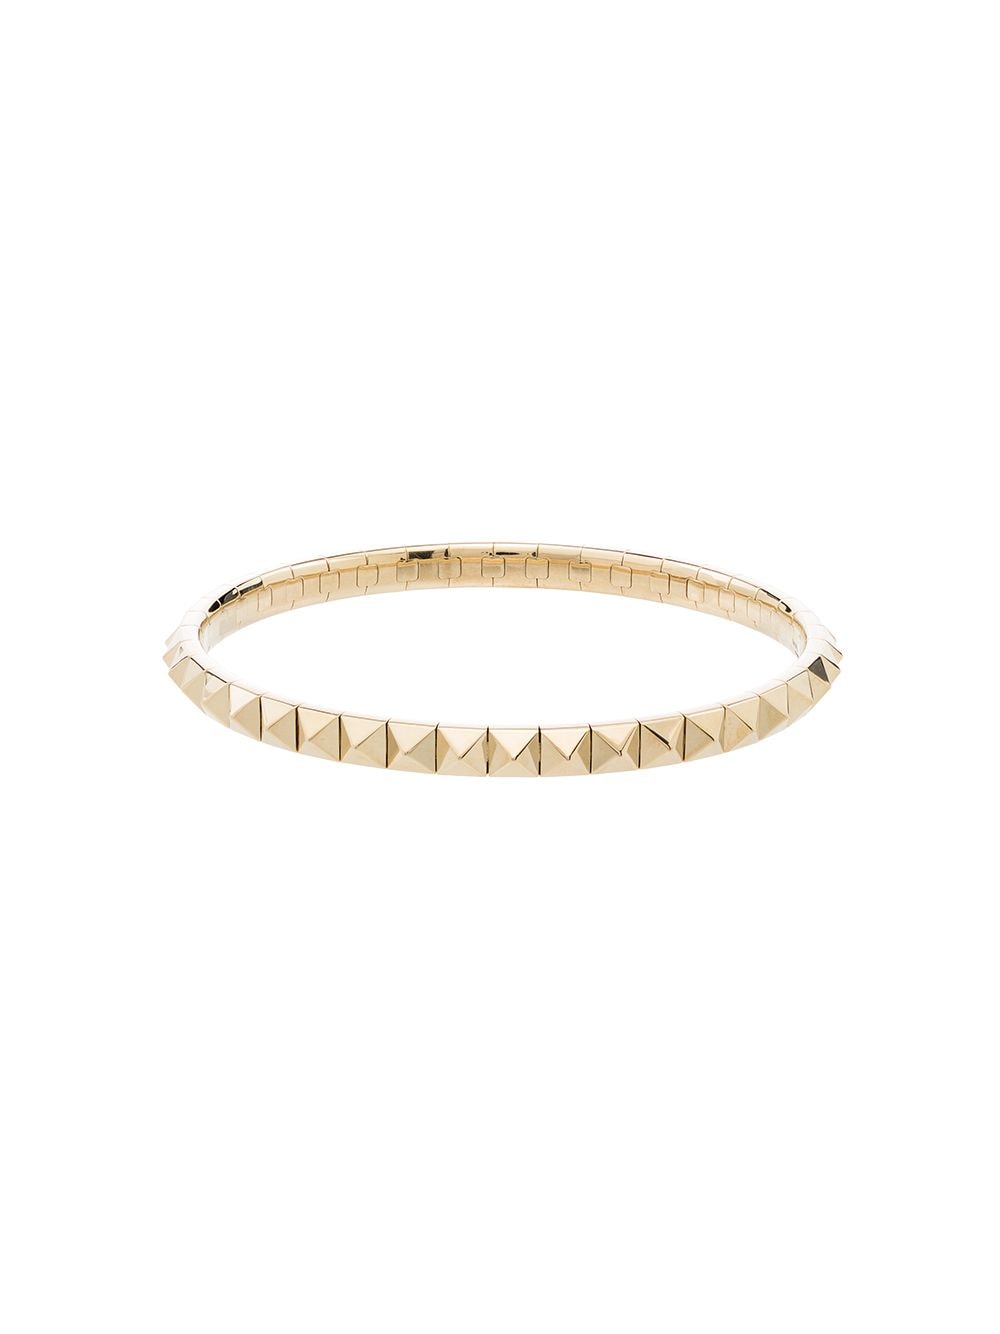 Jacquie Aiche 14K yellow gold diamond stretch bracelet